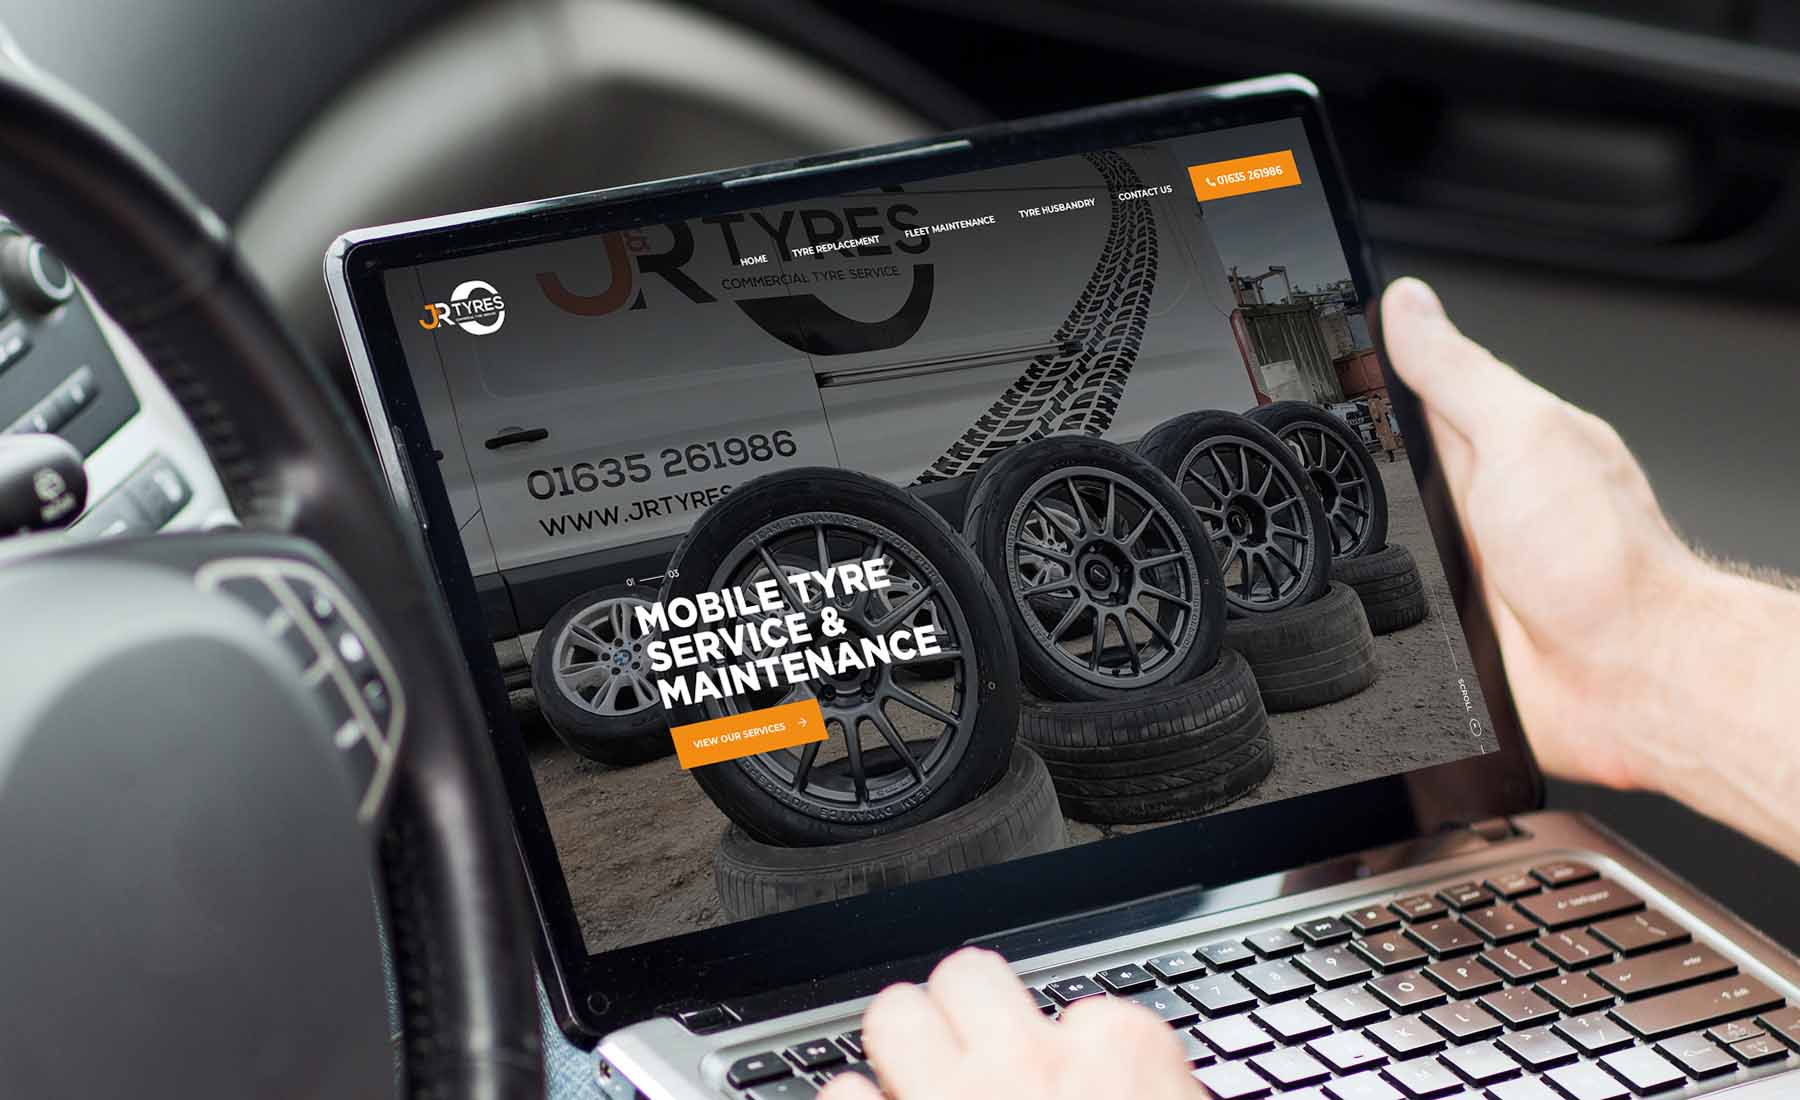 Mobile Tyre Service Website